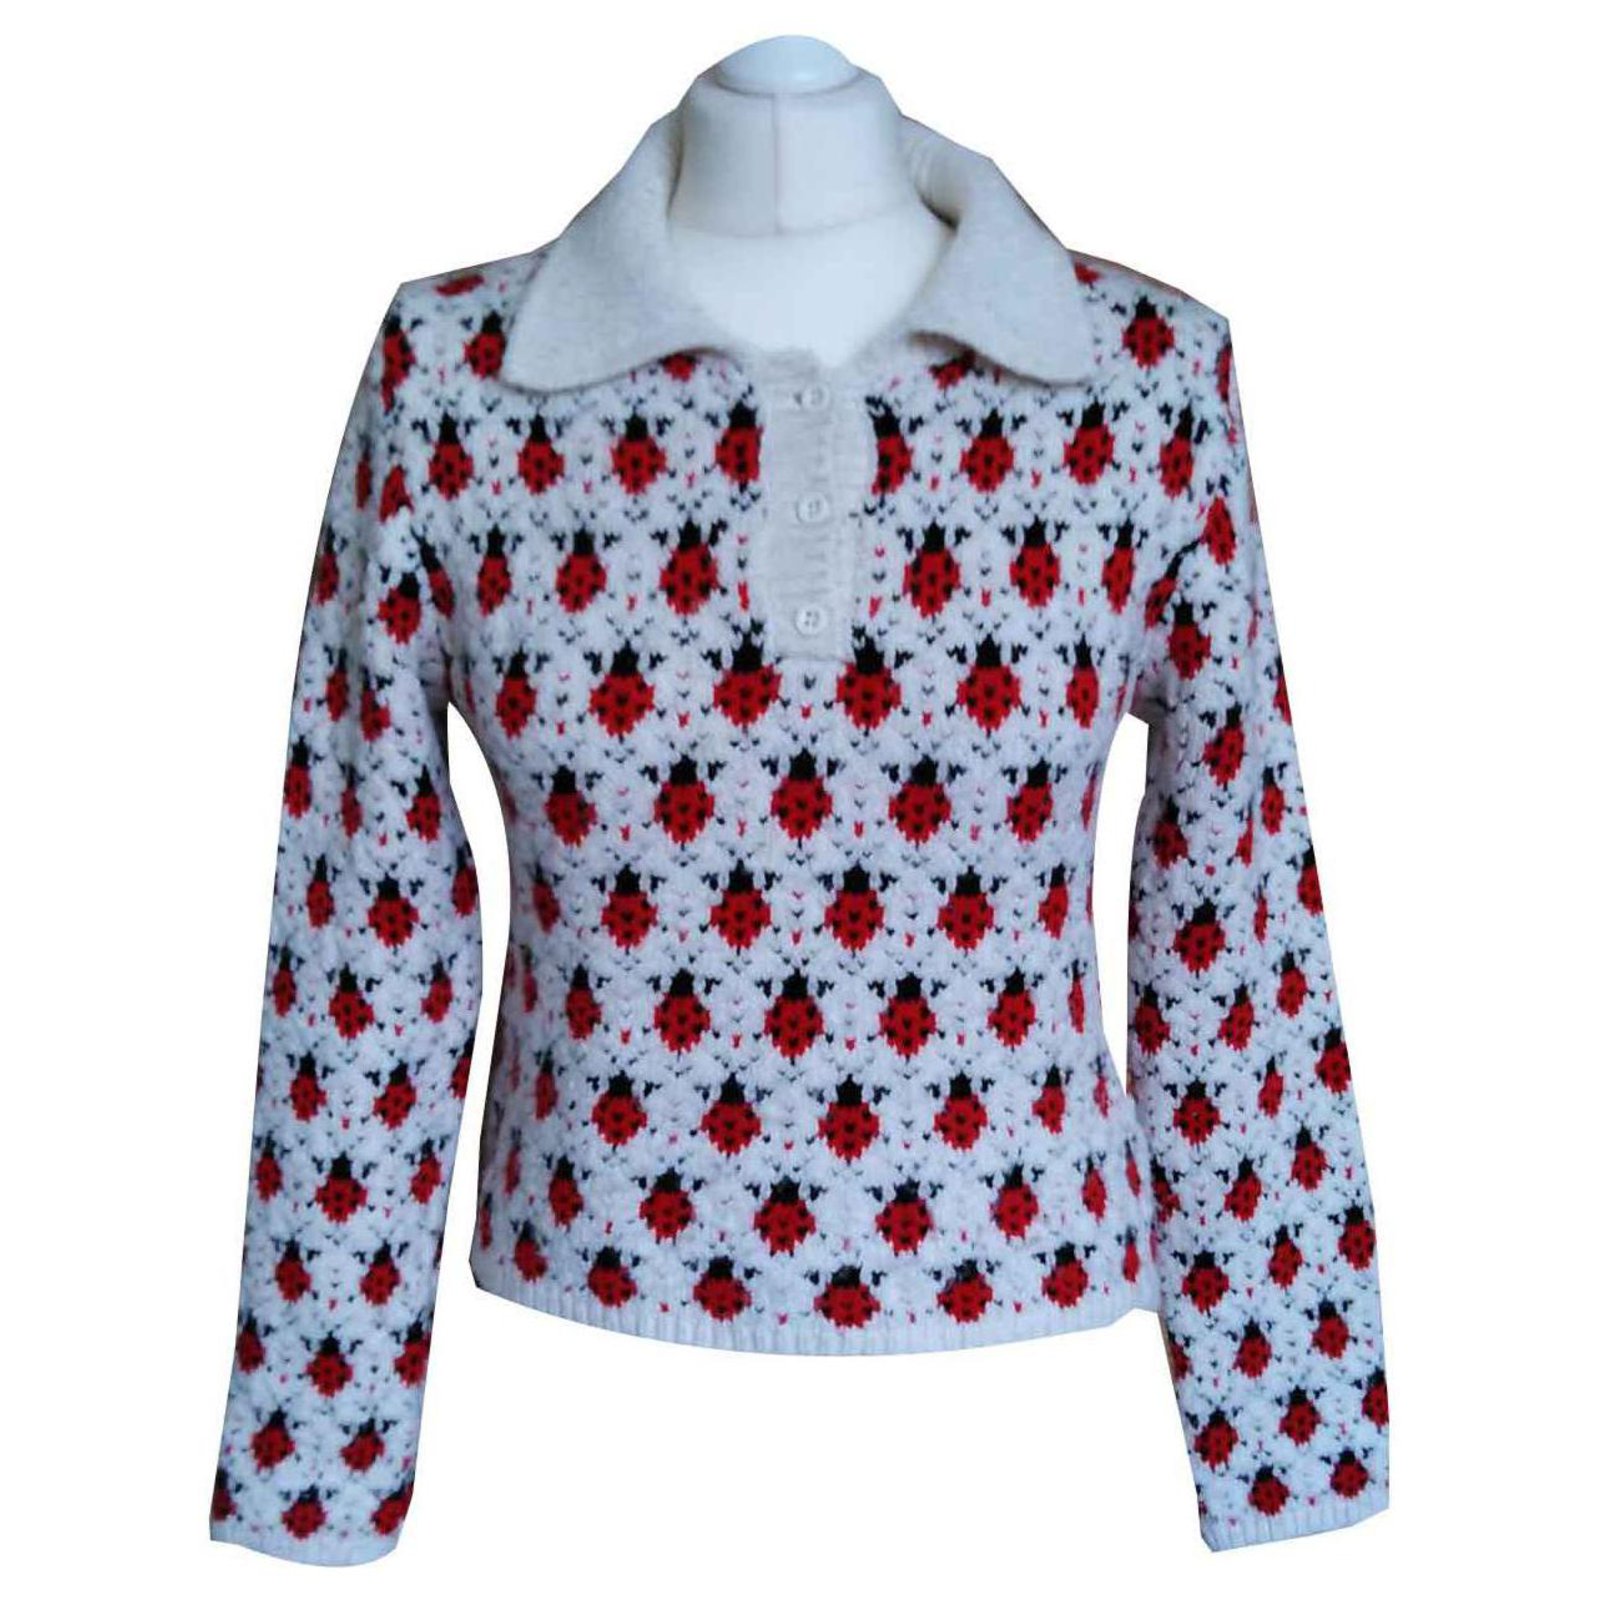 Zara Ladybird Knitwear Other Cream ref 